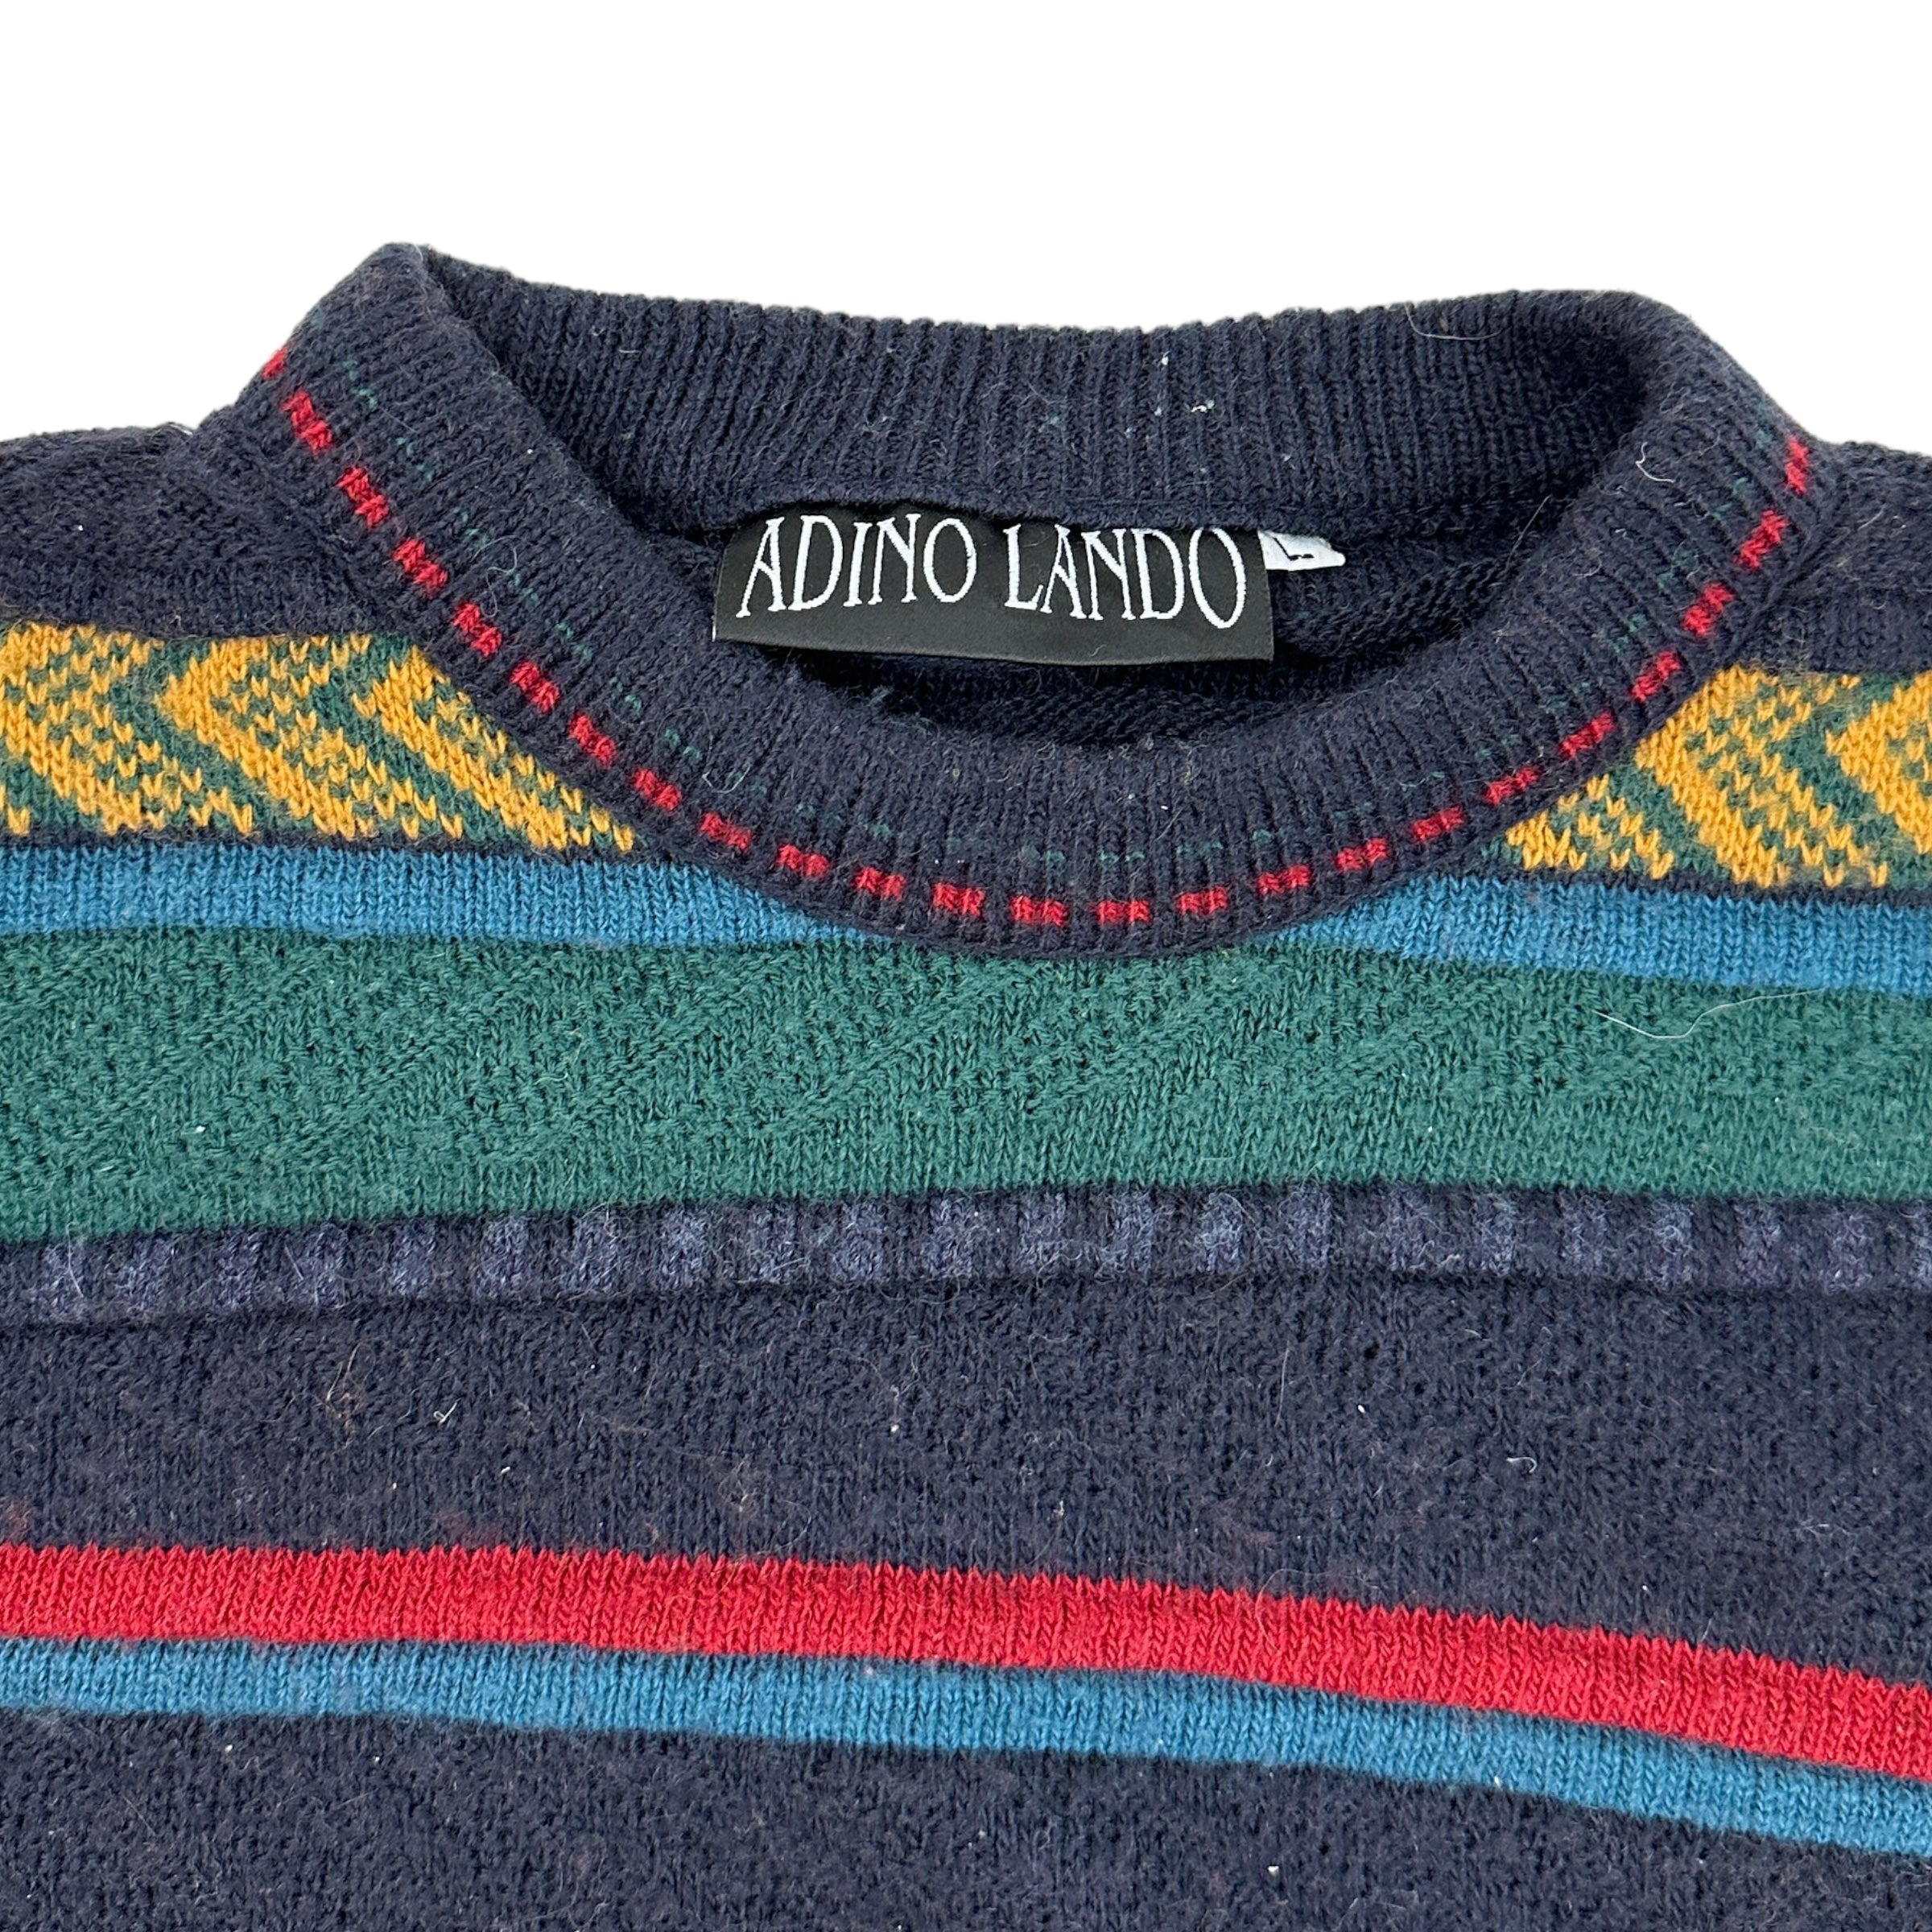 Vintage Adino Lando Coogi Style Knit Navy/Green